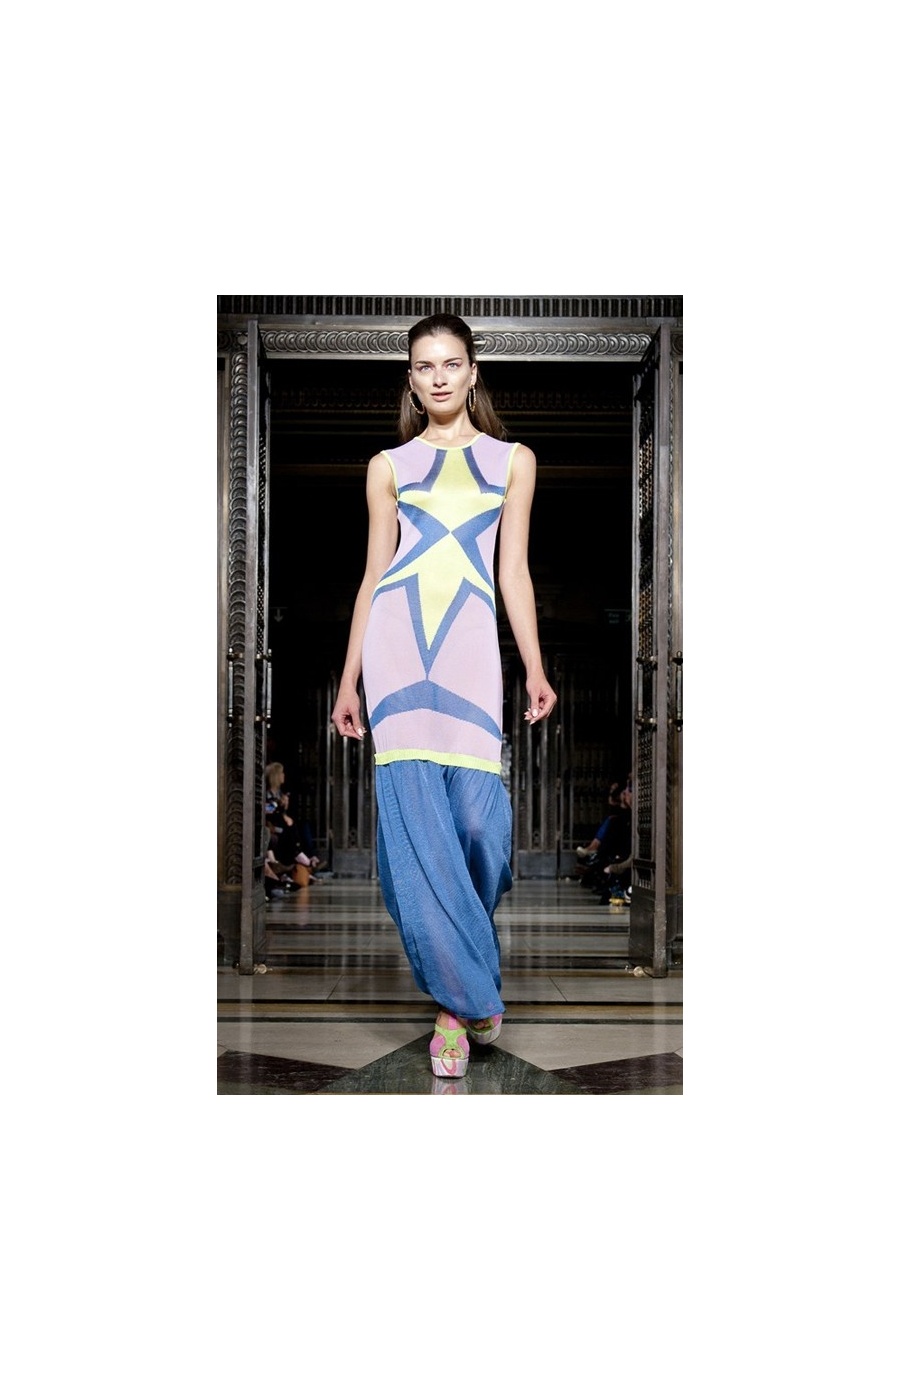 Hexagram Star Dress with Long Skirt